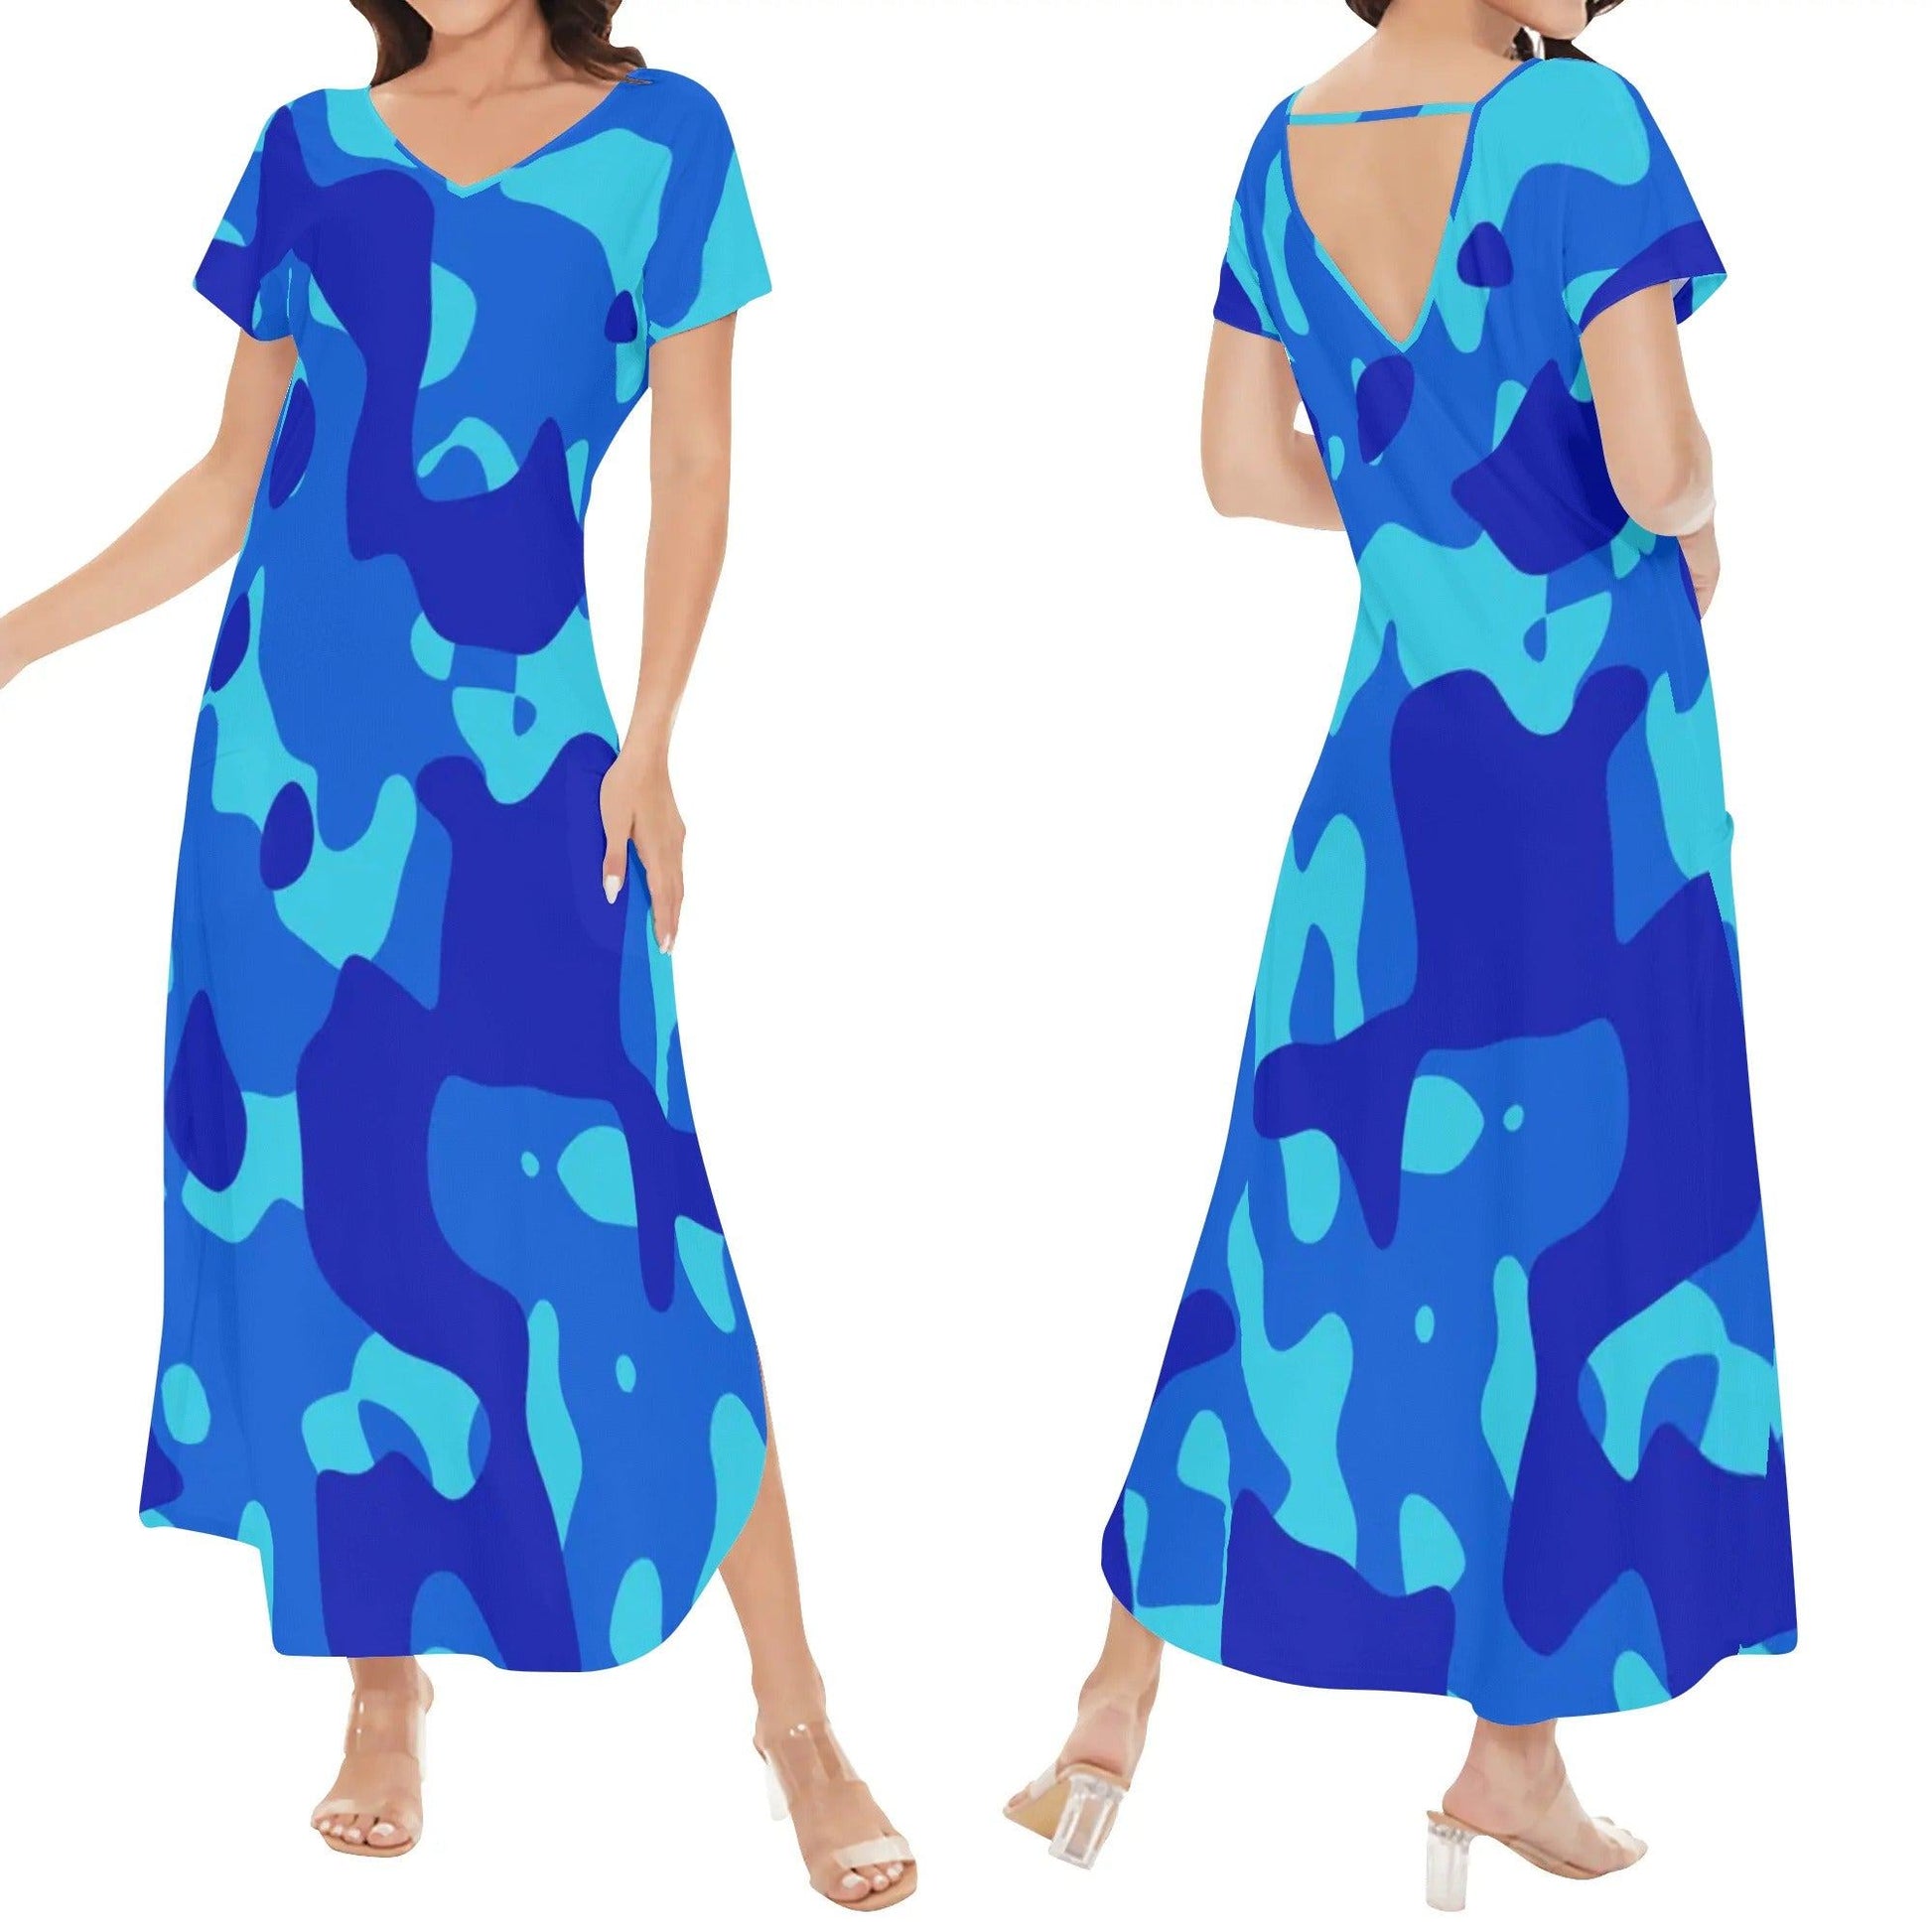 Blue Camouflage kurzärmliges drapiertes Kleid drapiertes Kleid 63.99 Blue, Camouflage, drapiert, kleid, kurzärmlig JLR Design